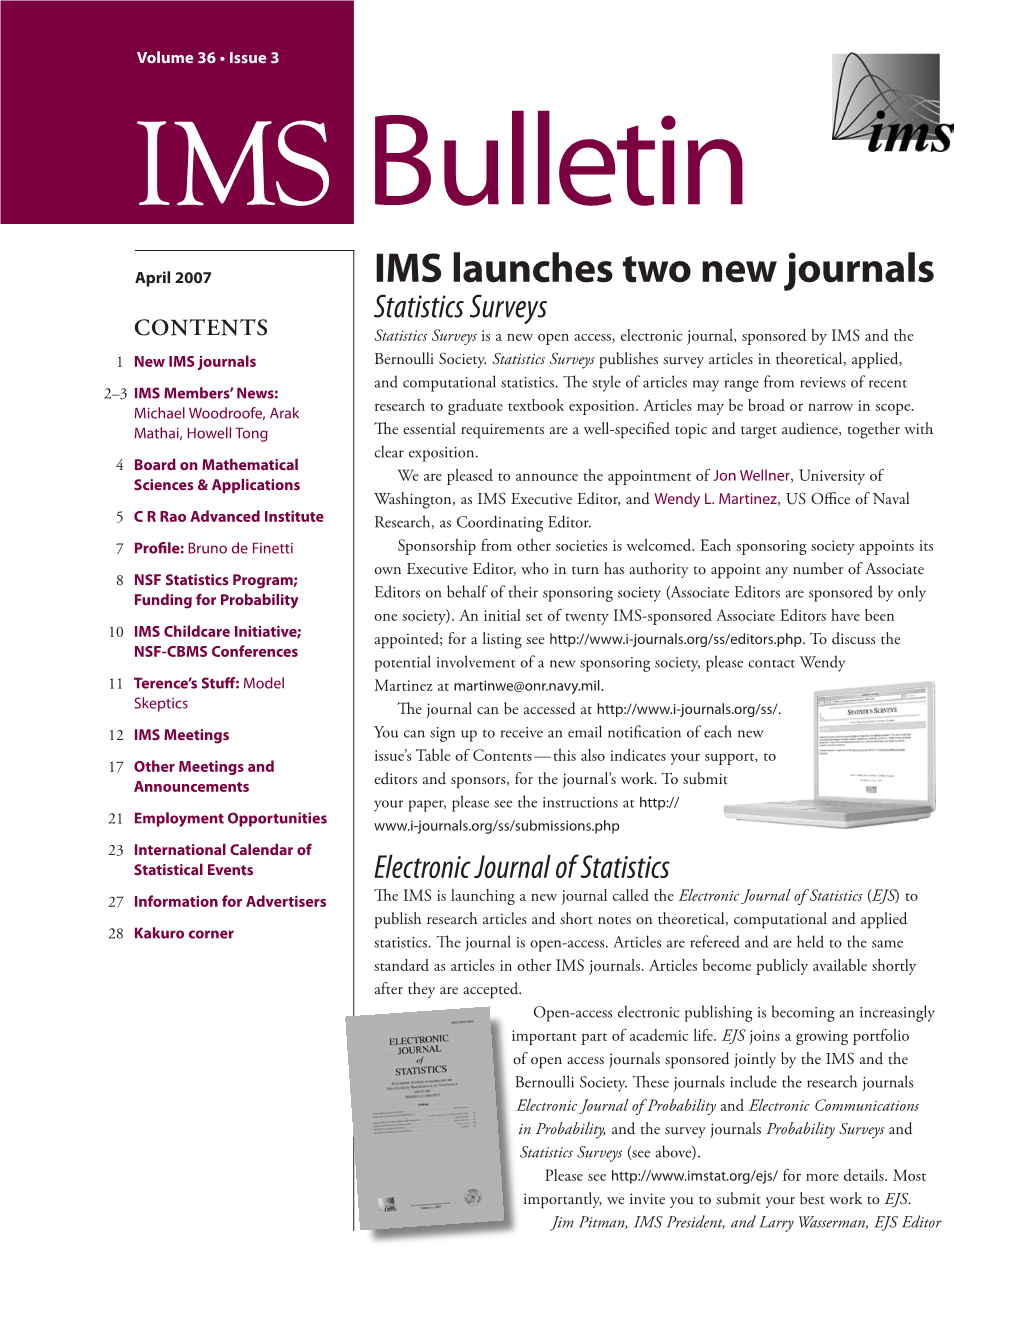 IMS Bulletin